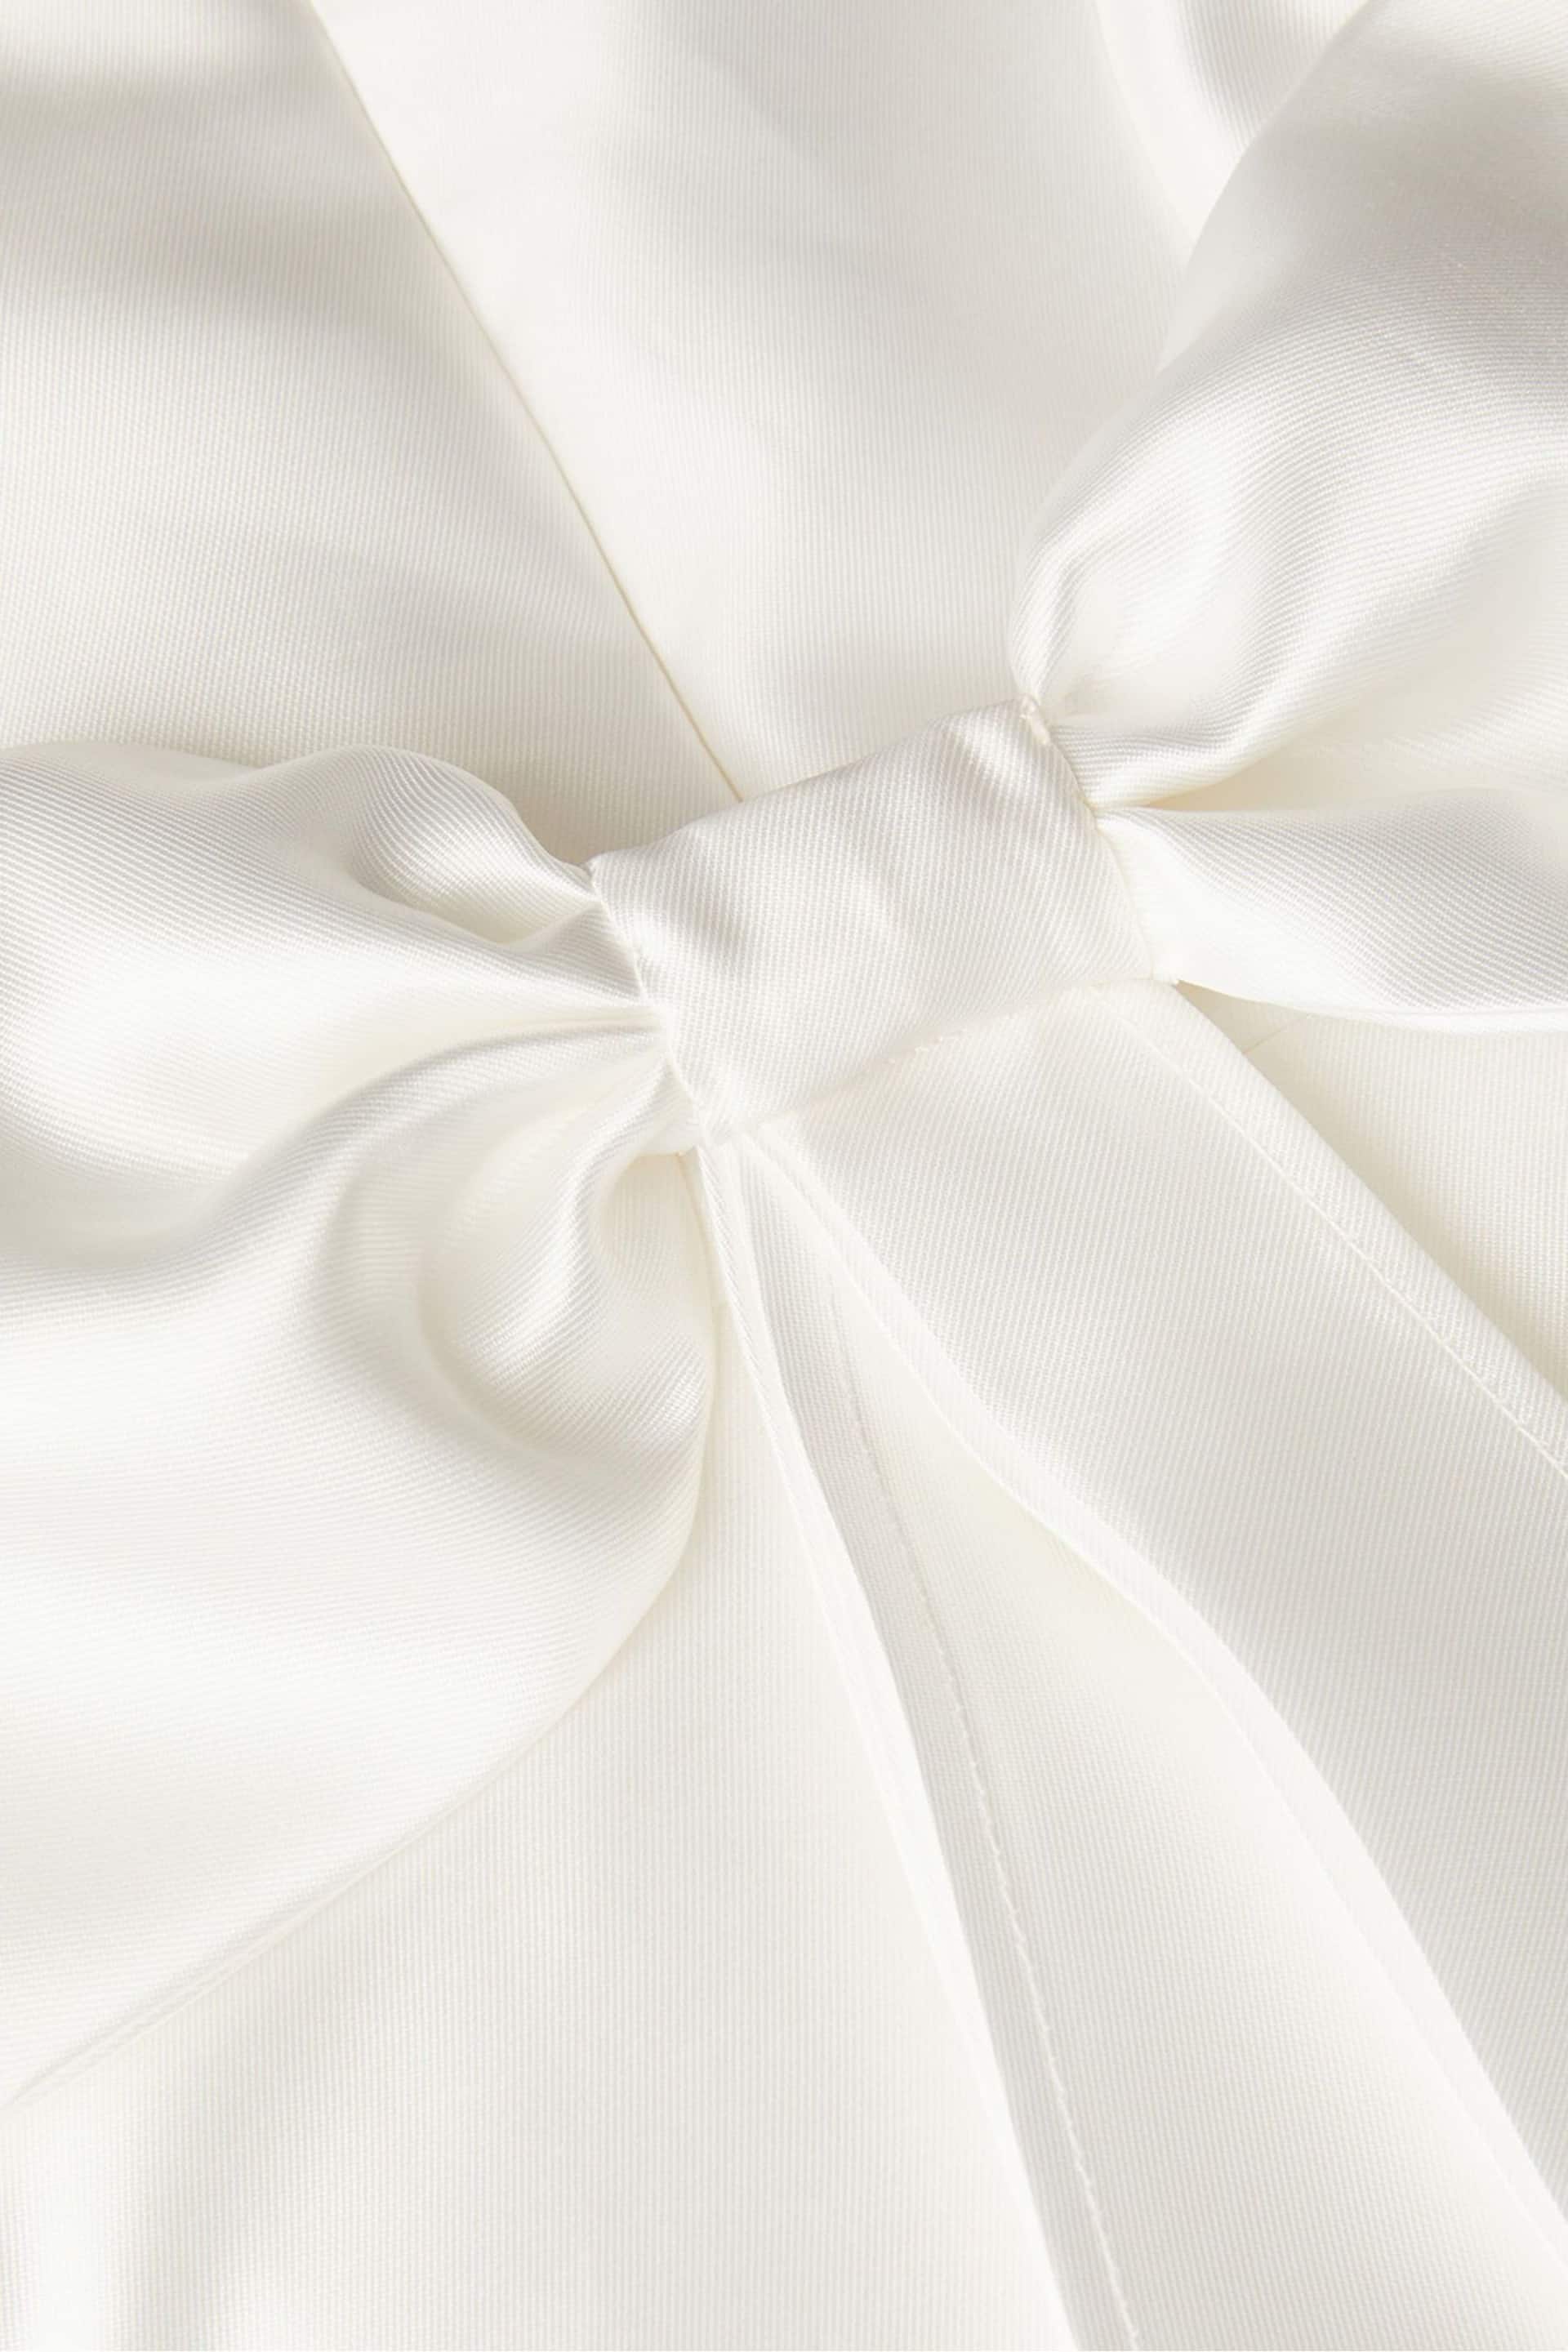 Monsoon White Cordelia Duchess Dress - Image 3 of 3